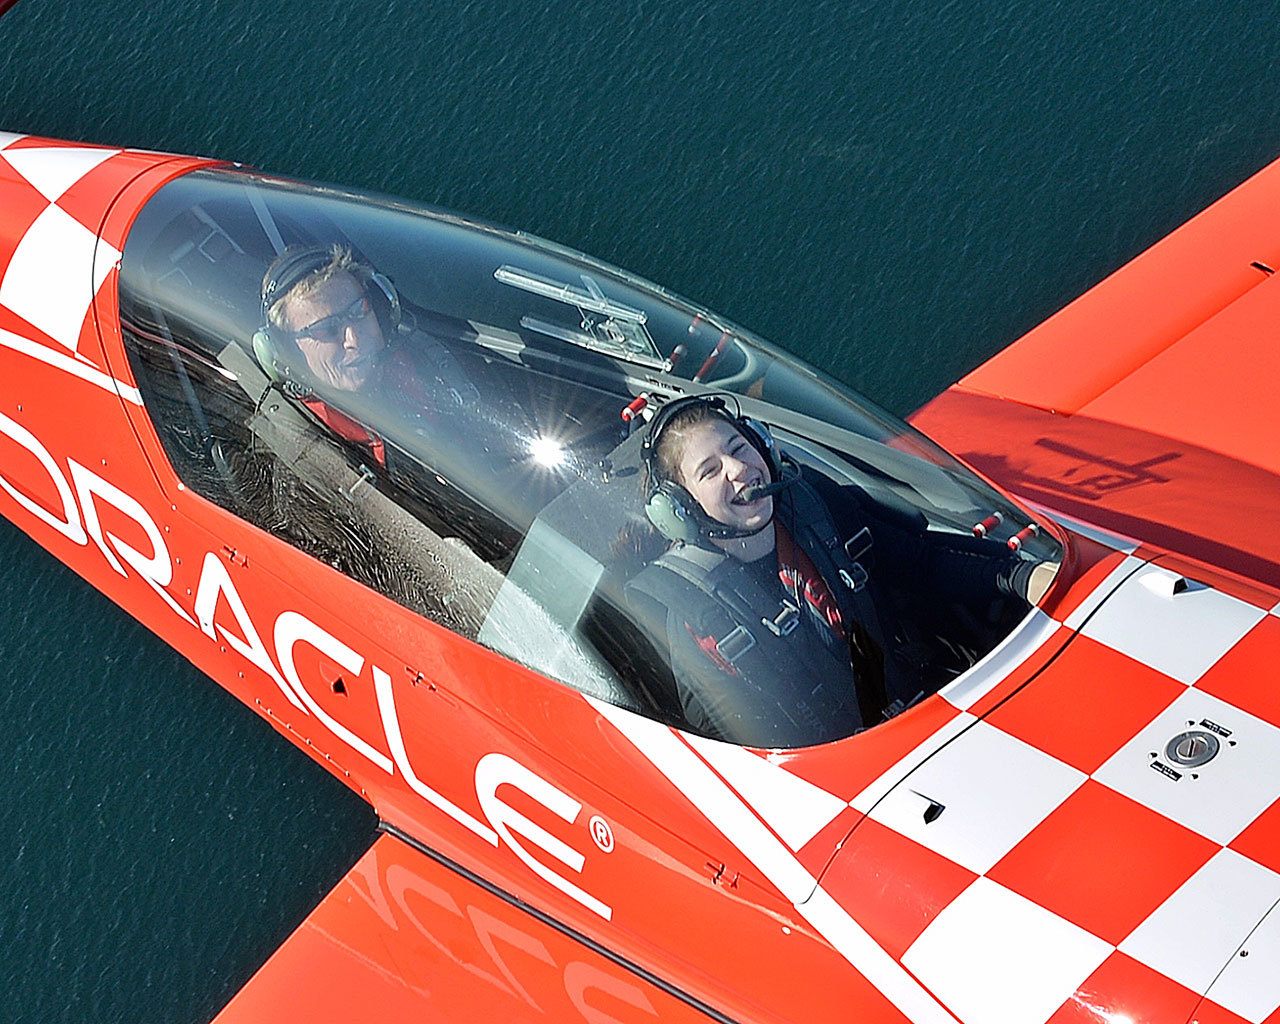 Aspiring Lake Stevens Pilot Gets Flight Of A Lifetime At Seafair